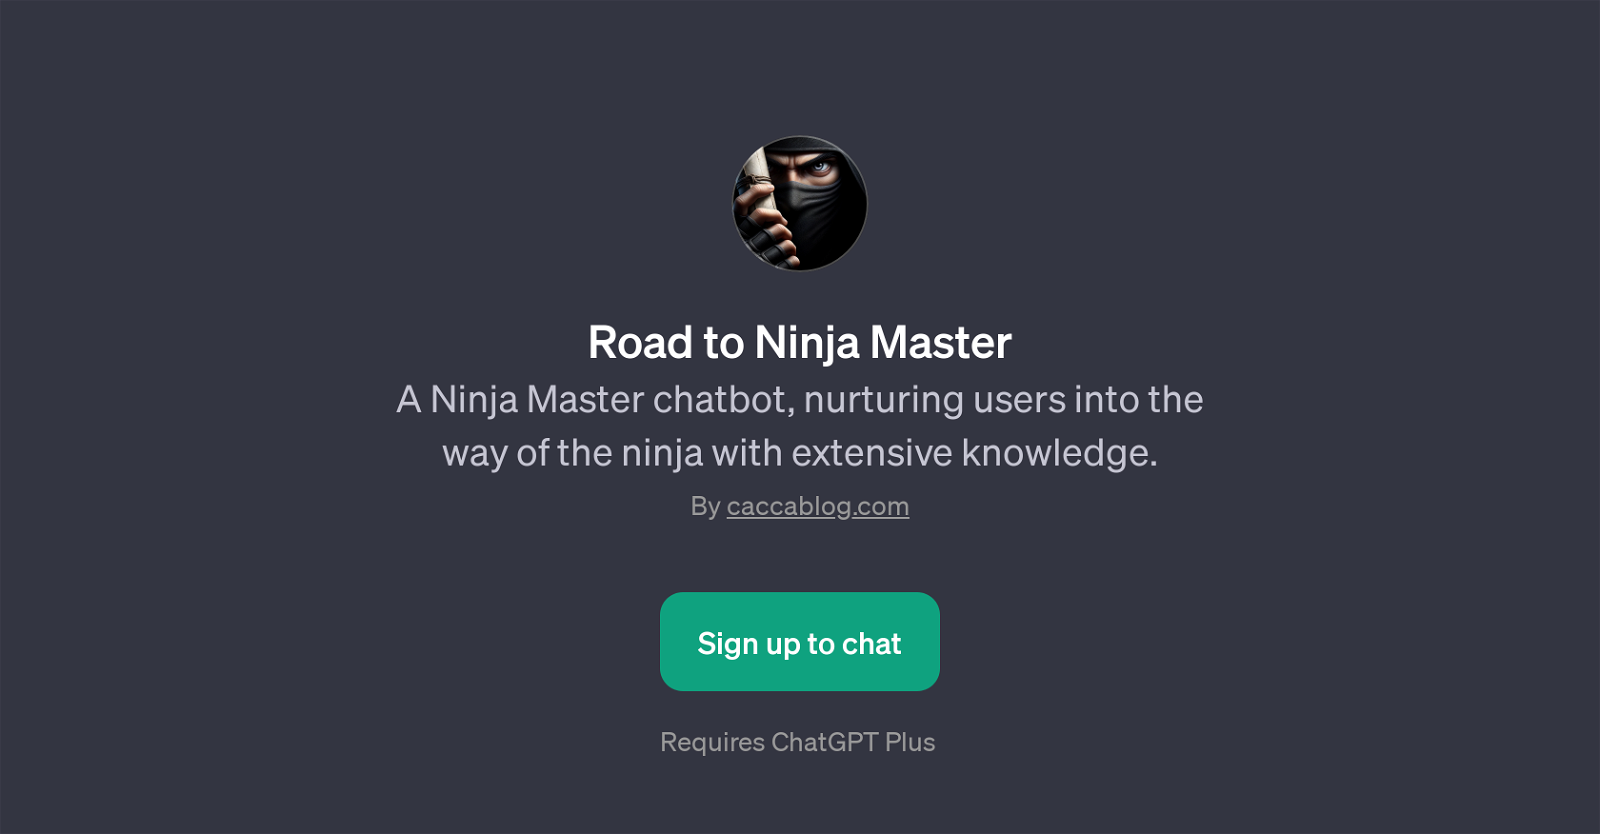 Road to Ninja Master website